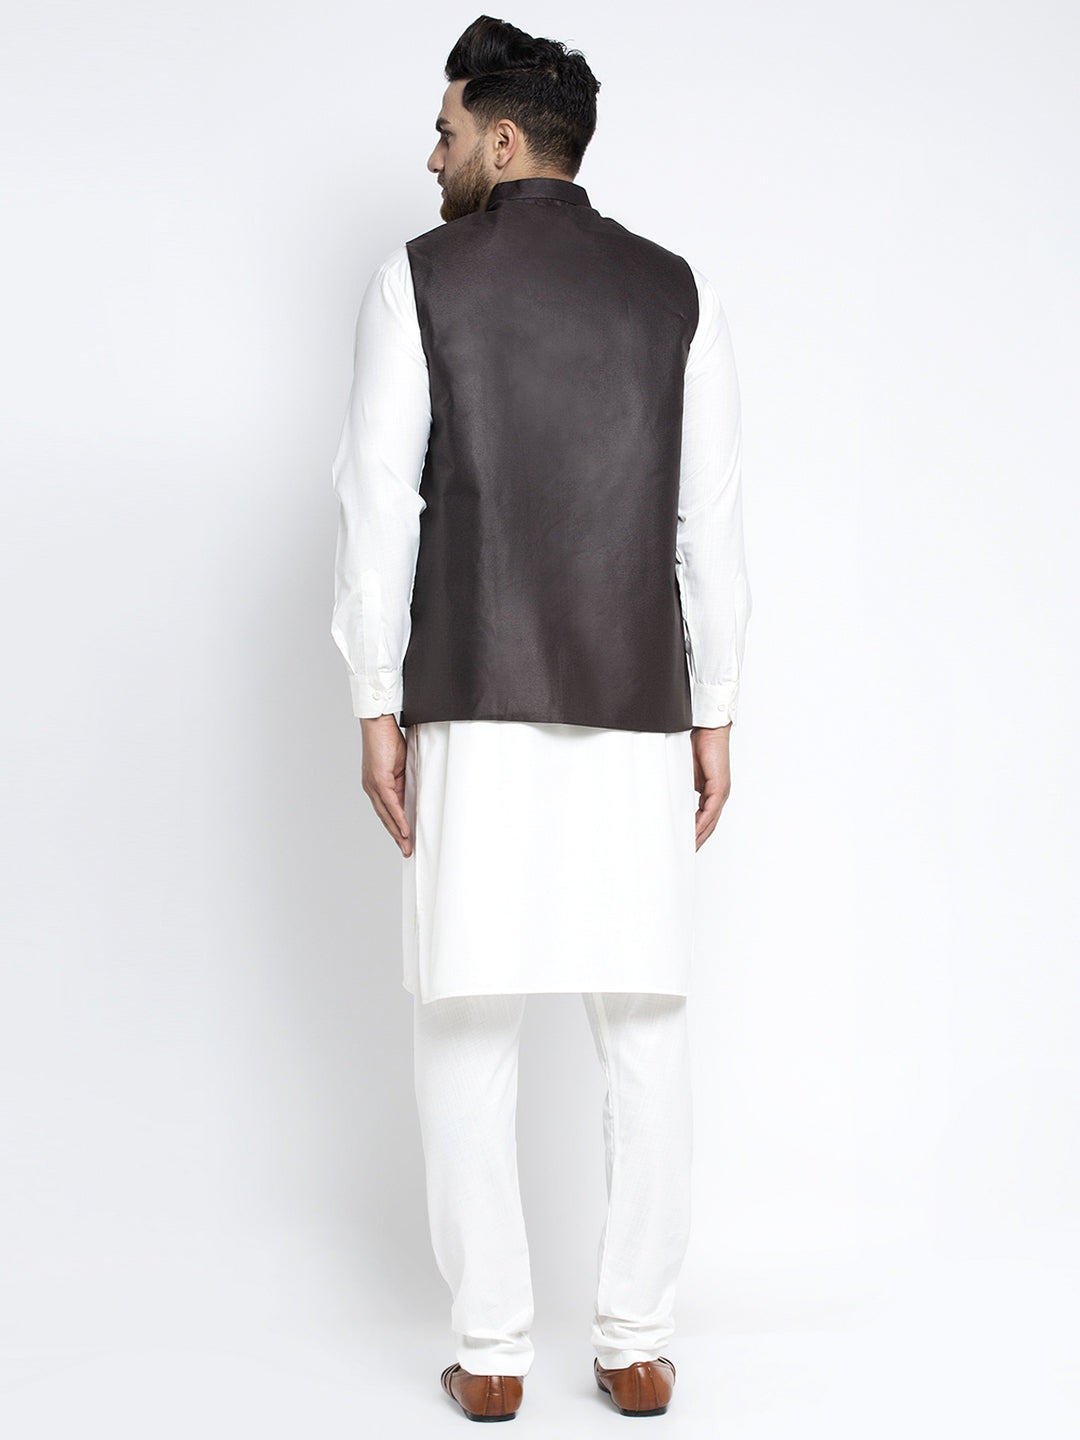 Jompers Men's Solid White Cotton Kurta Payjama with Solid Coffee Waistcoat